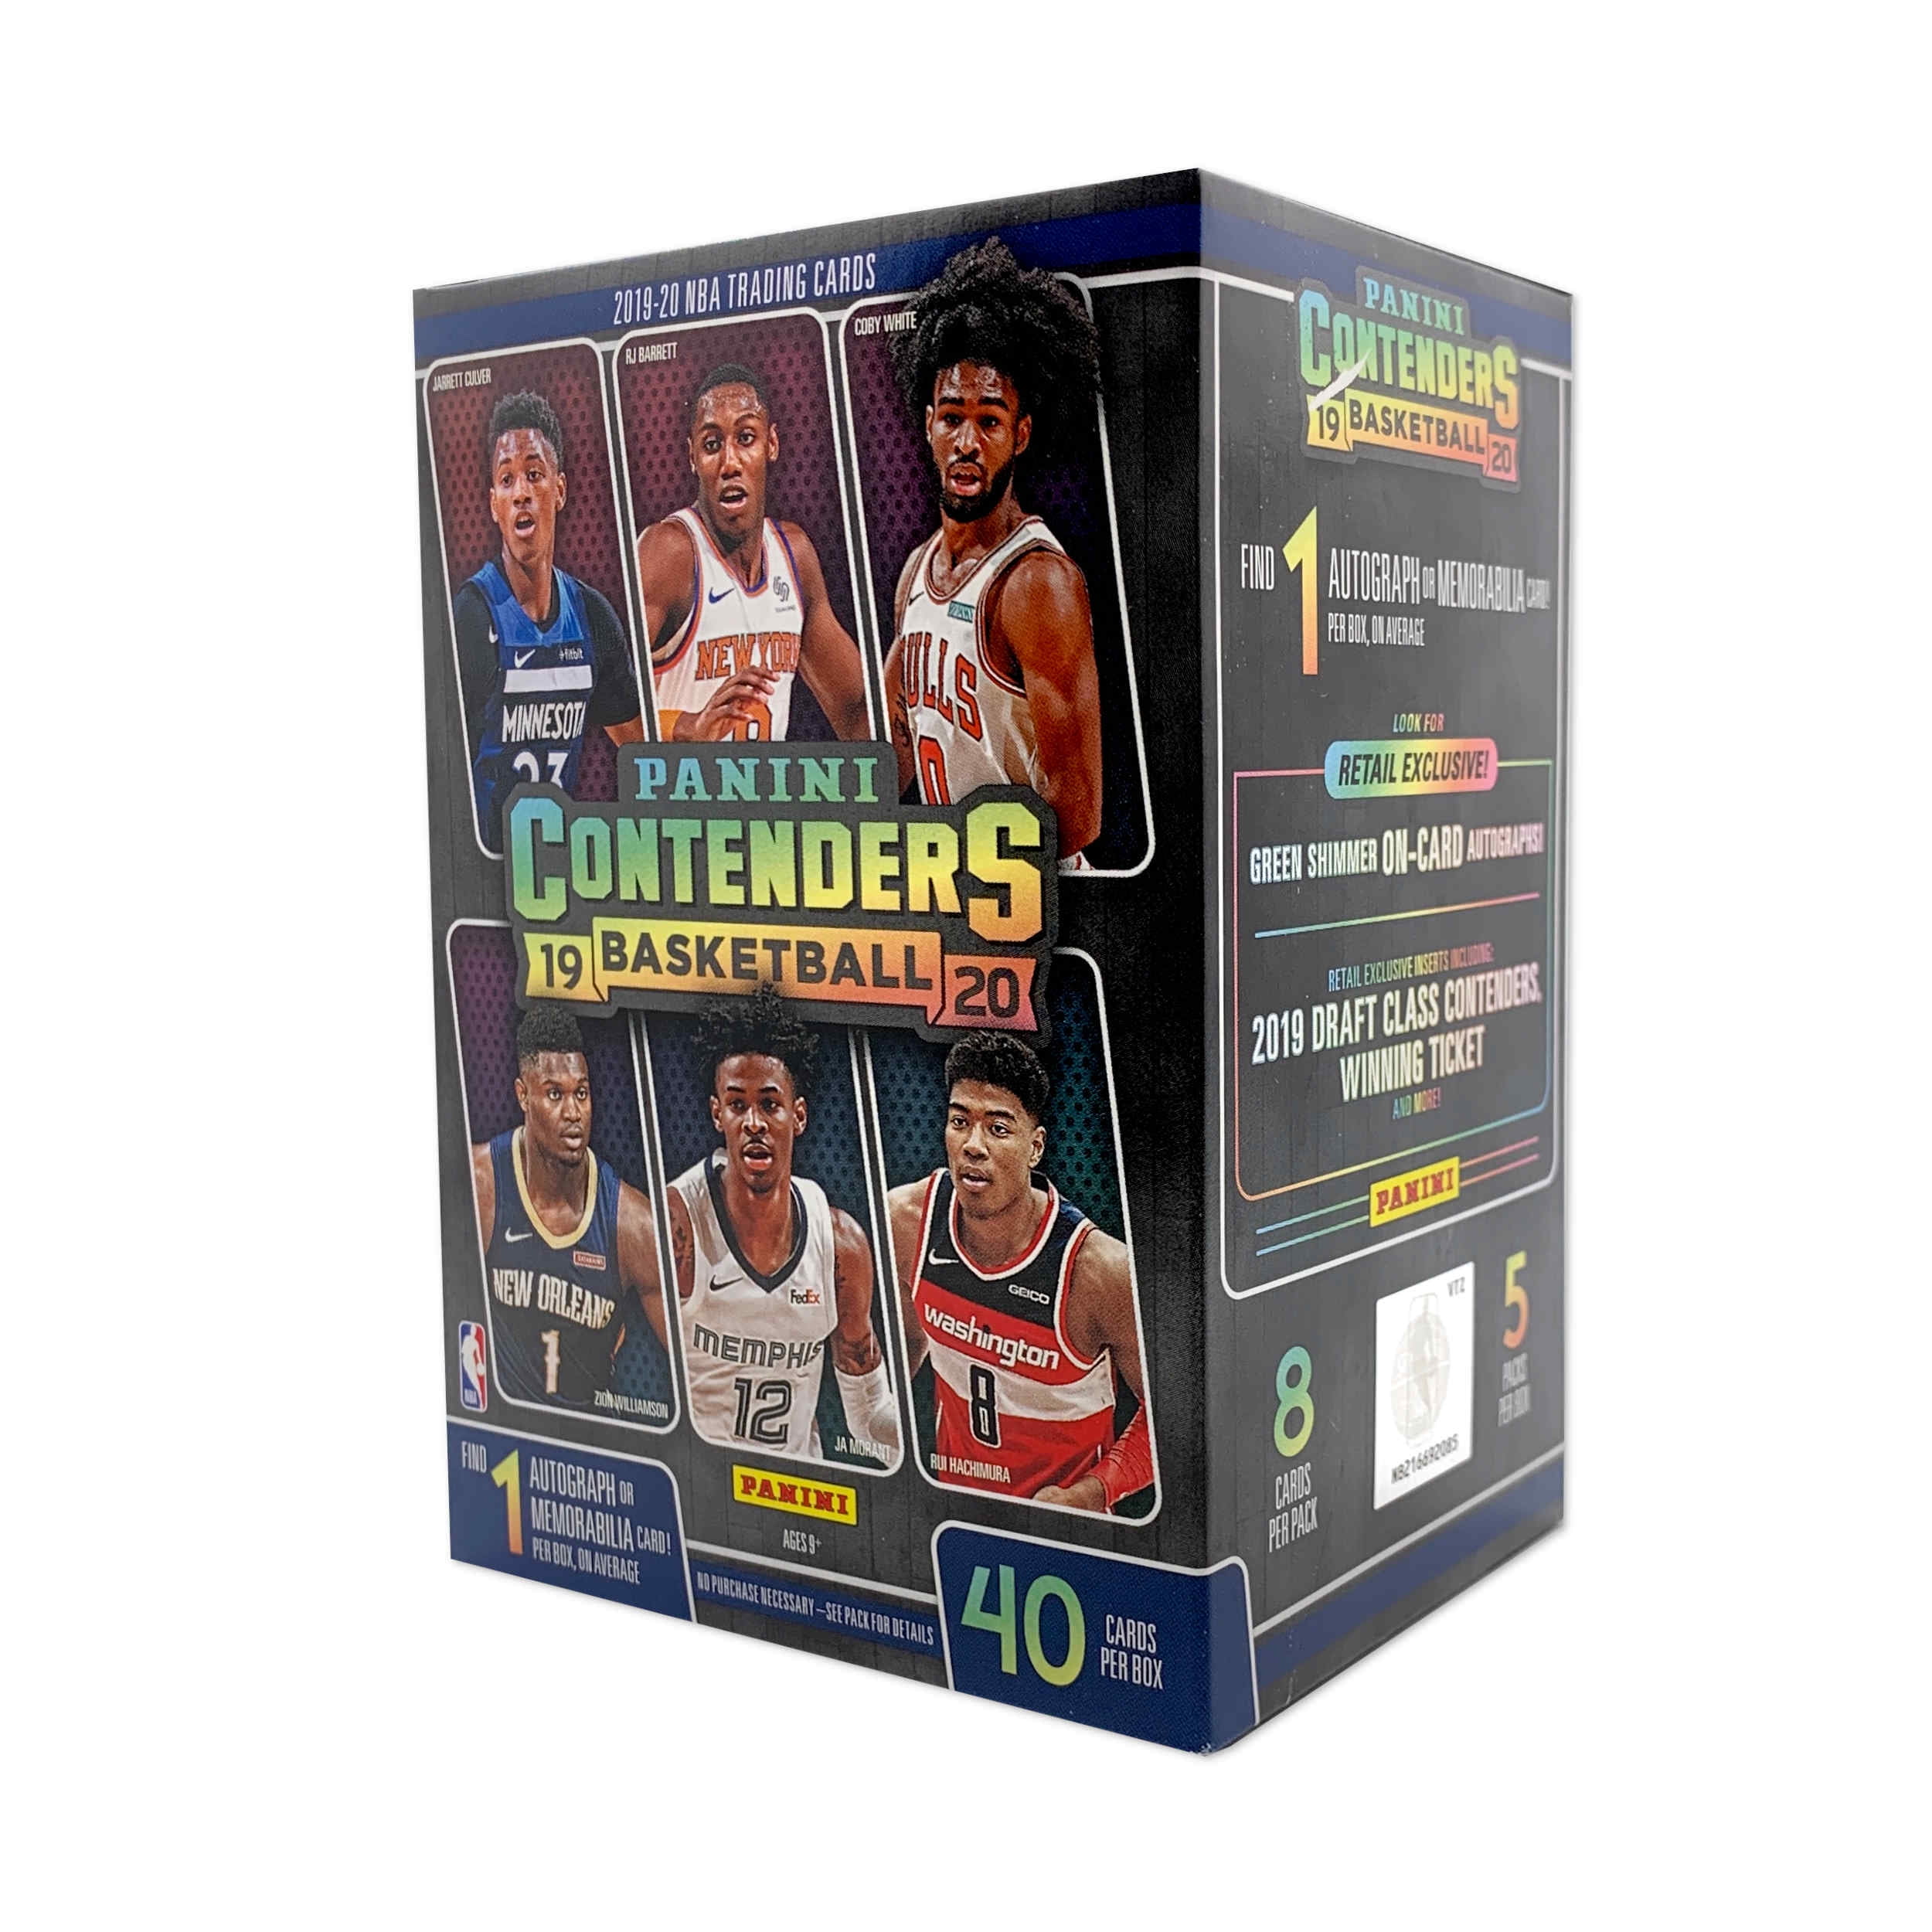 201920 Panini Contenders NBA Basketball Trading Cards Blaster Box 40